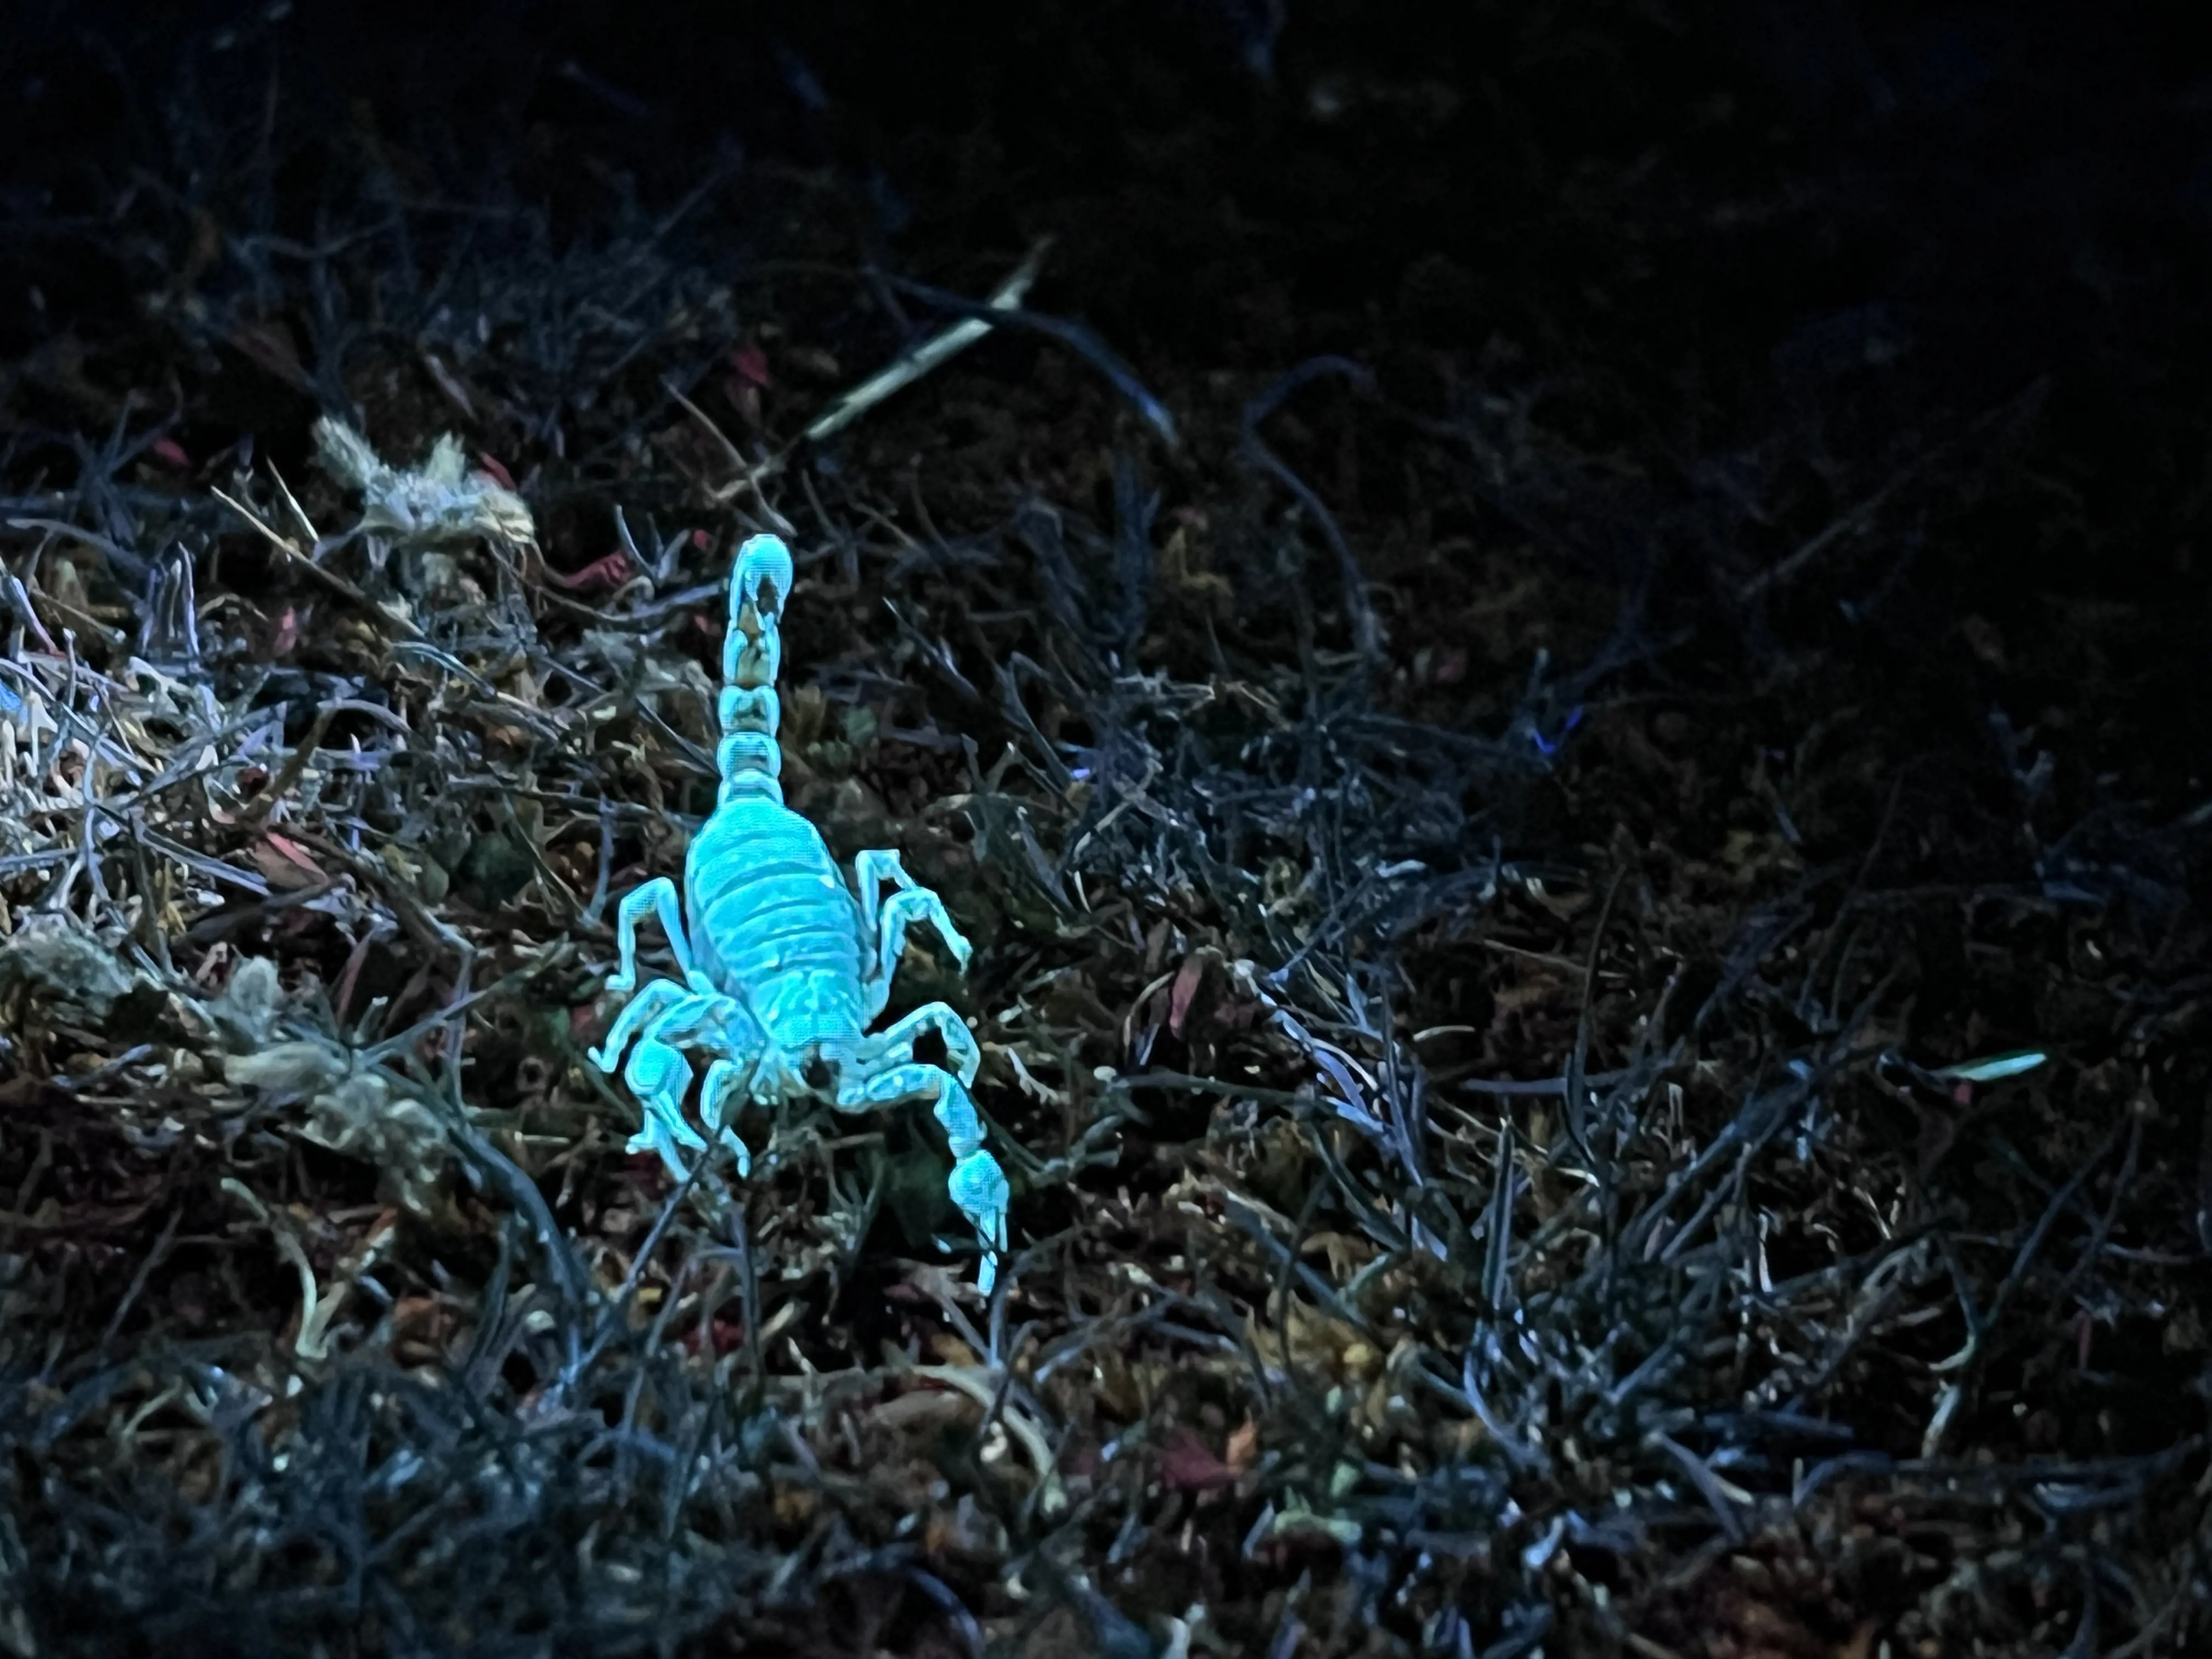 Brightly coloured scorpion under UV light.